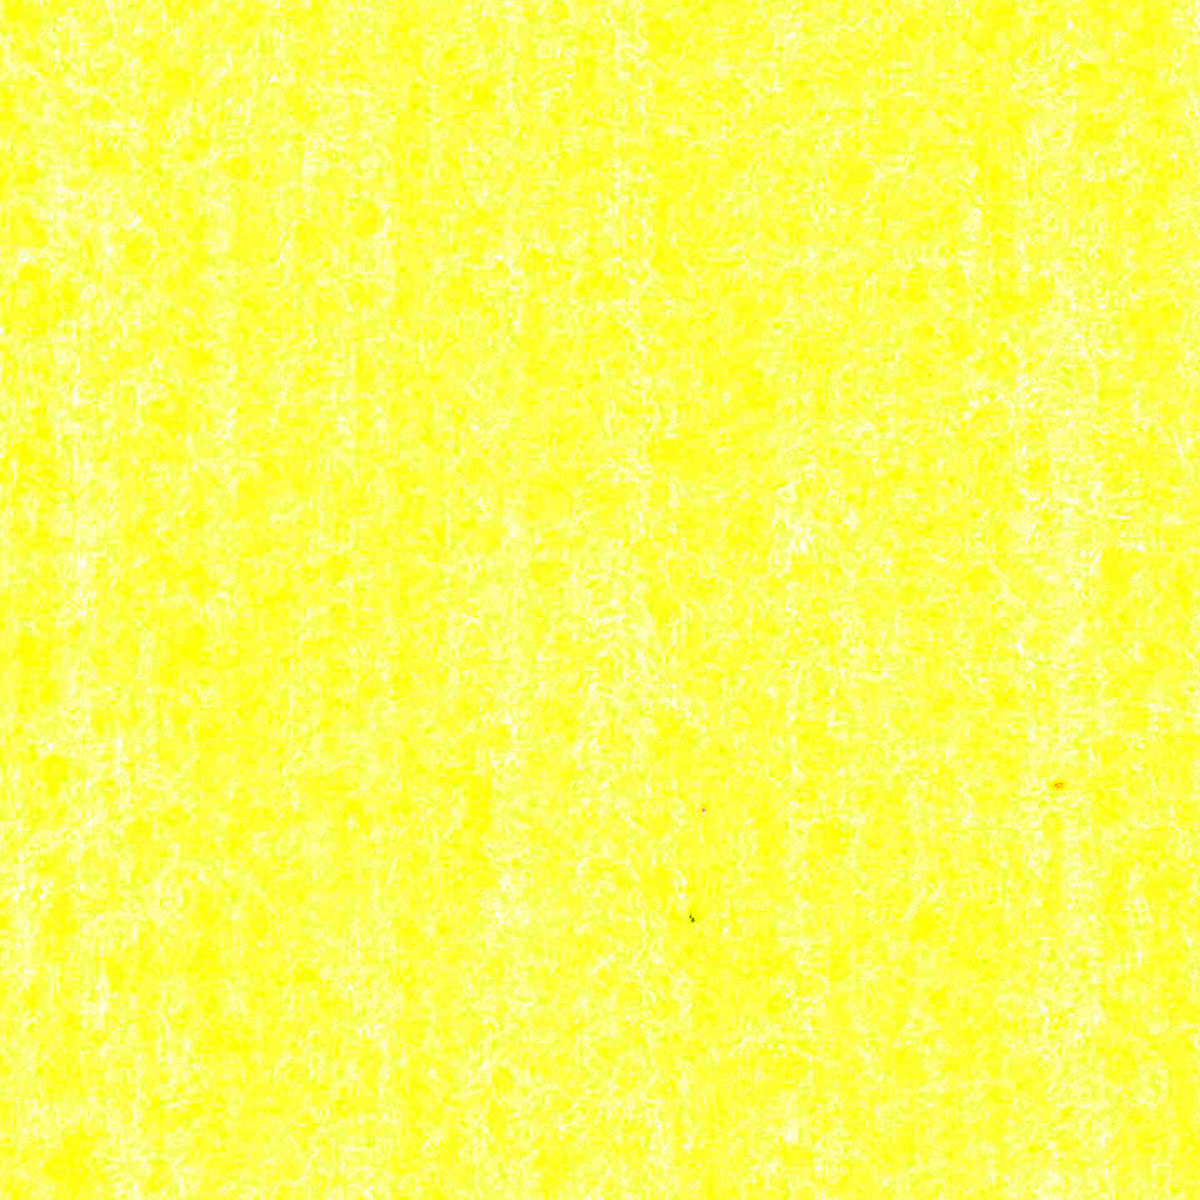 Chrome yellow - ColourLex